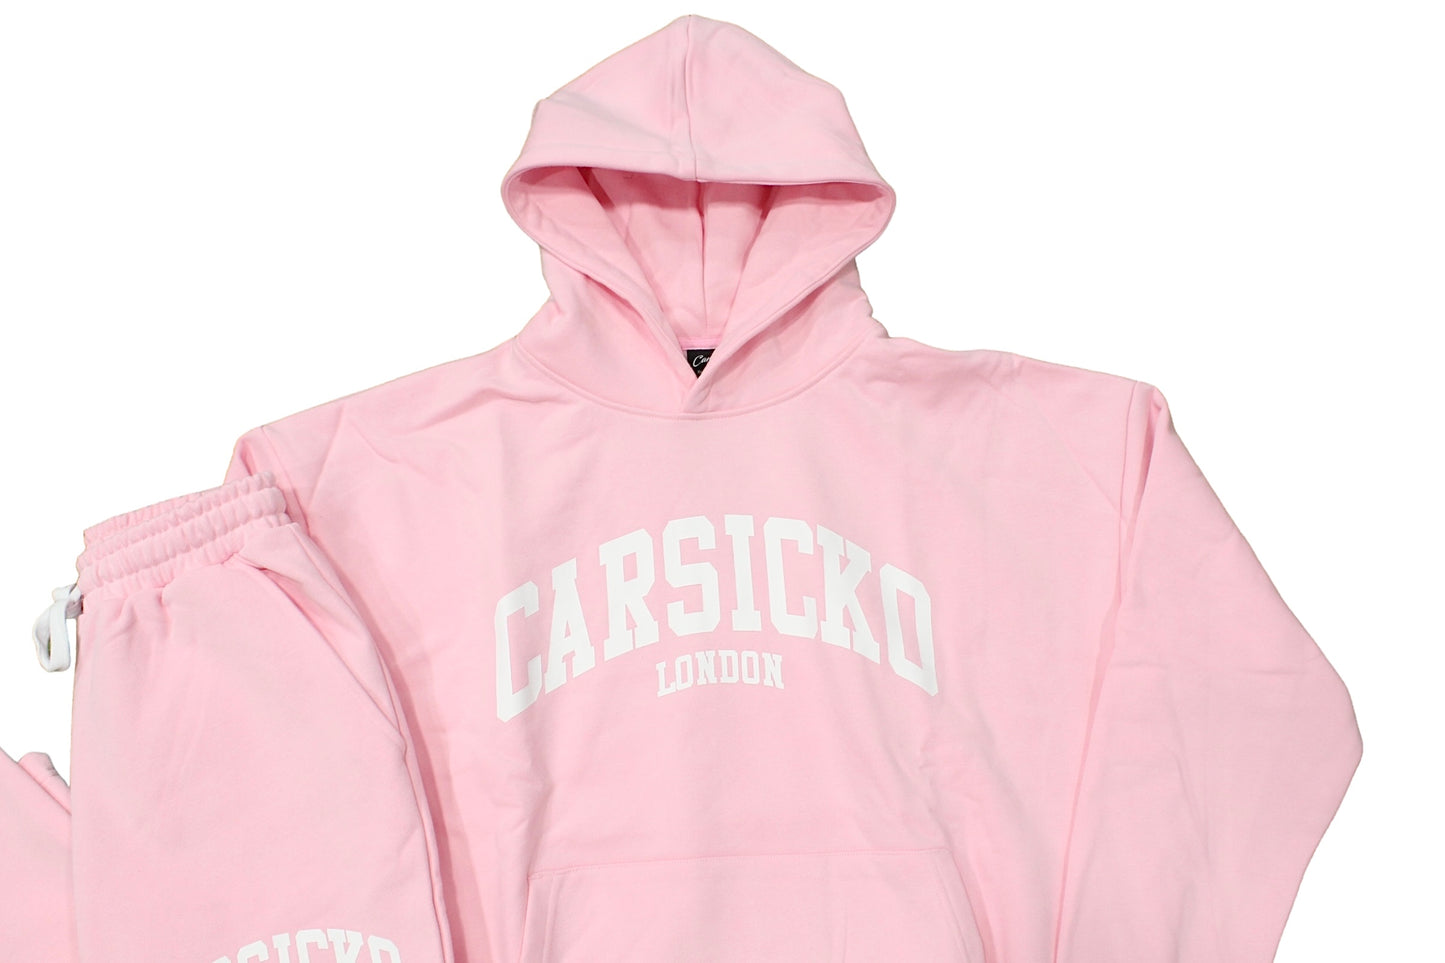 Carsicko London Pink Tracksuit Set